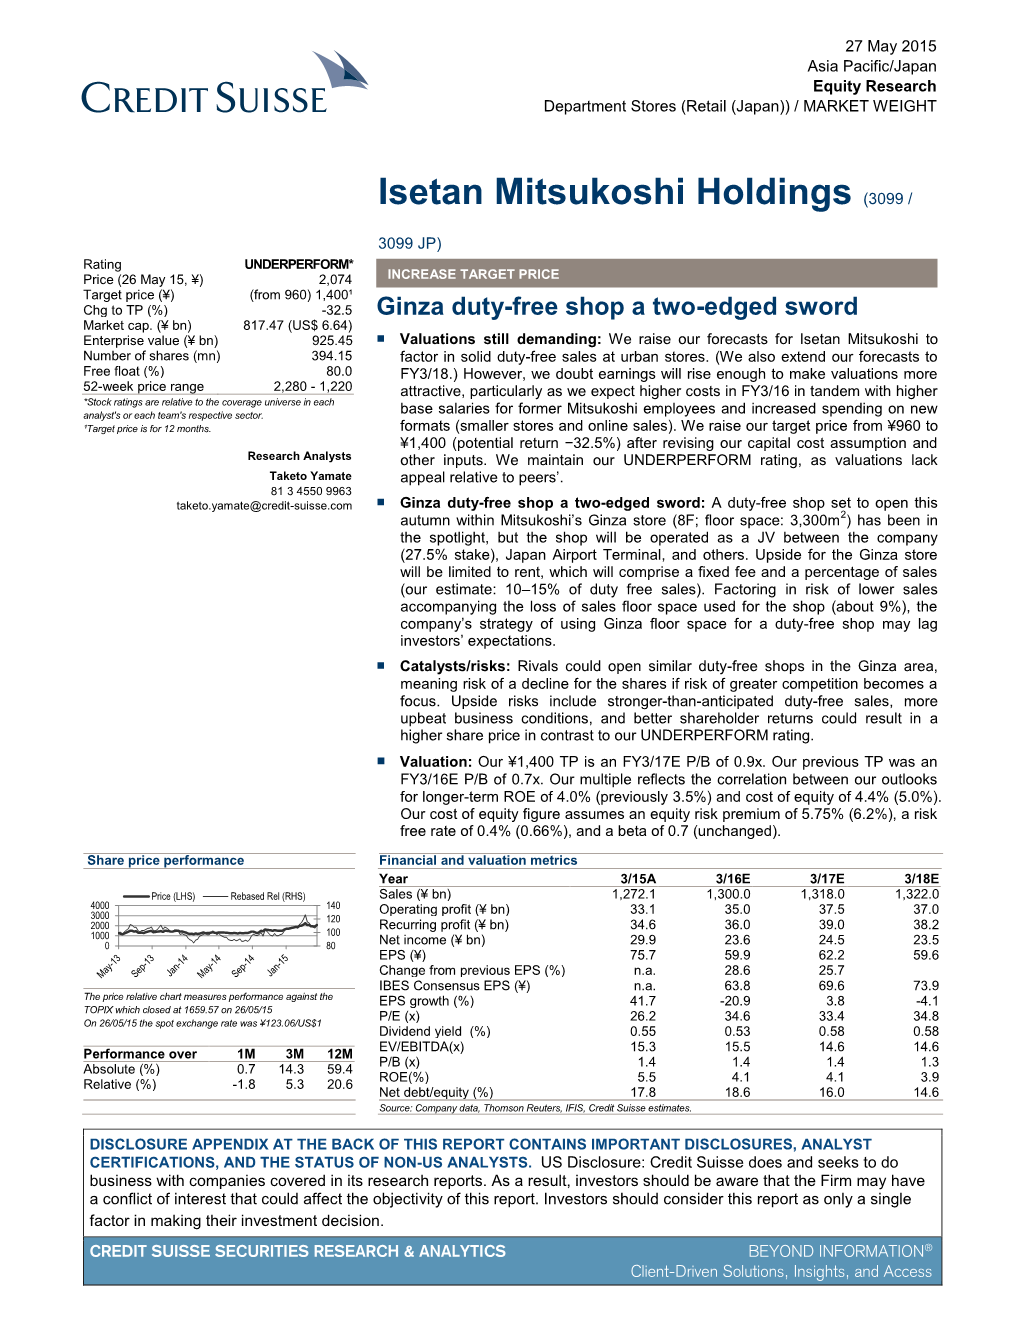 Isetan Mitsukoshi Holdings (3099